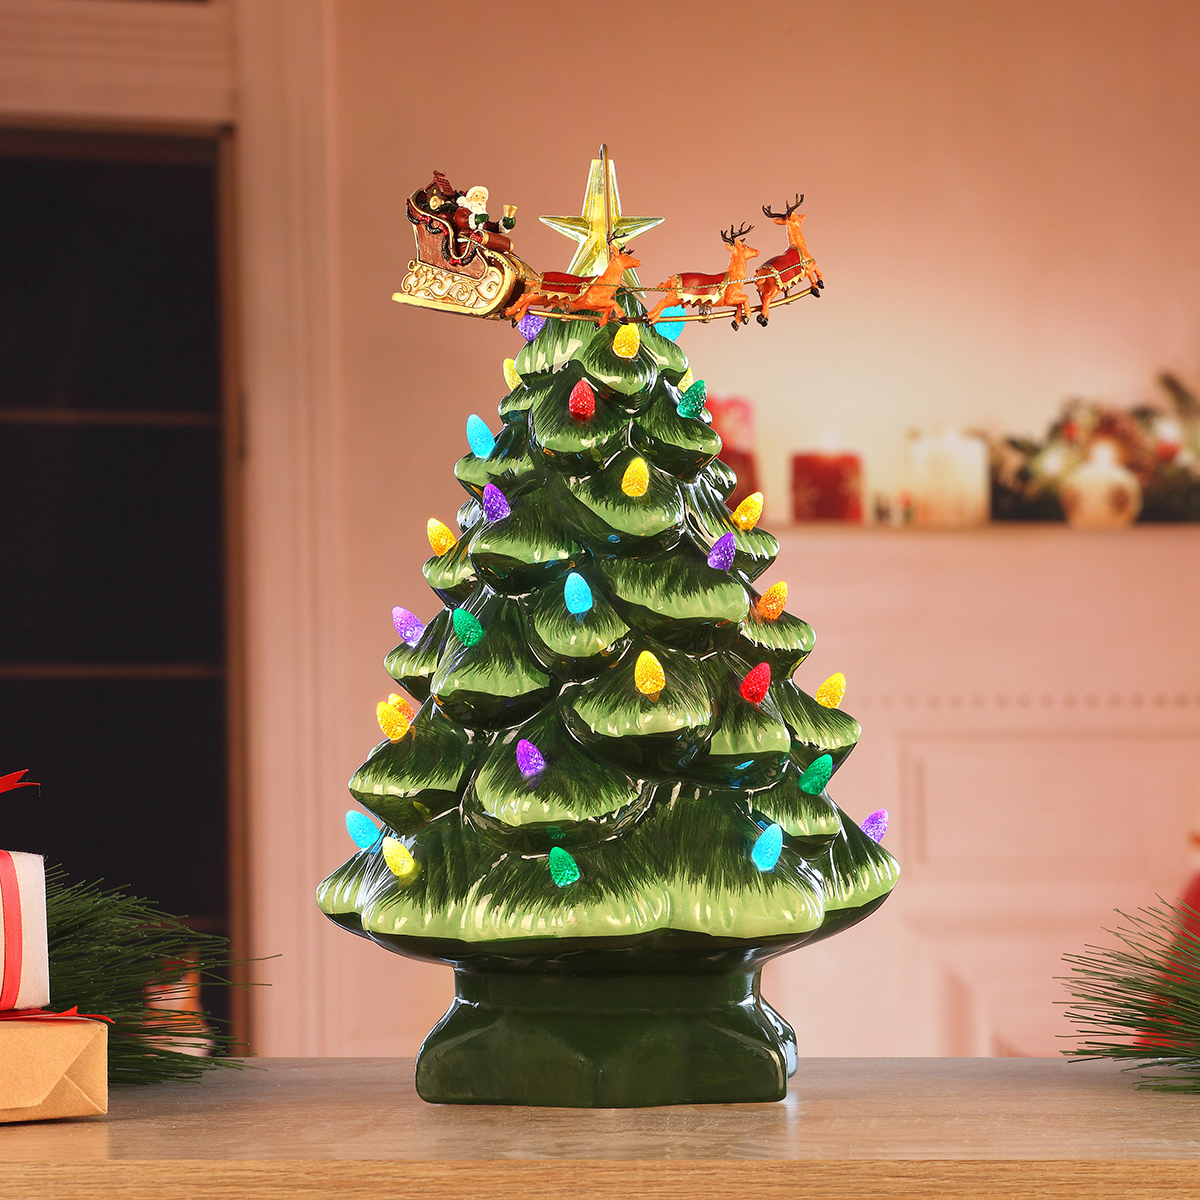 Mr. Christmas(R) Santa's Sleigh Animated Nostalgic Tree